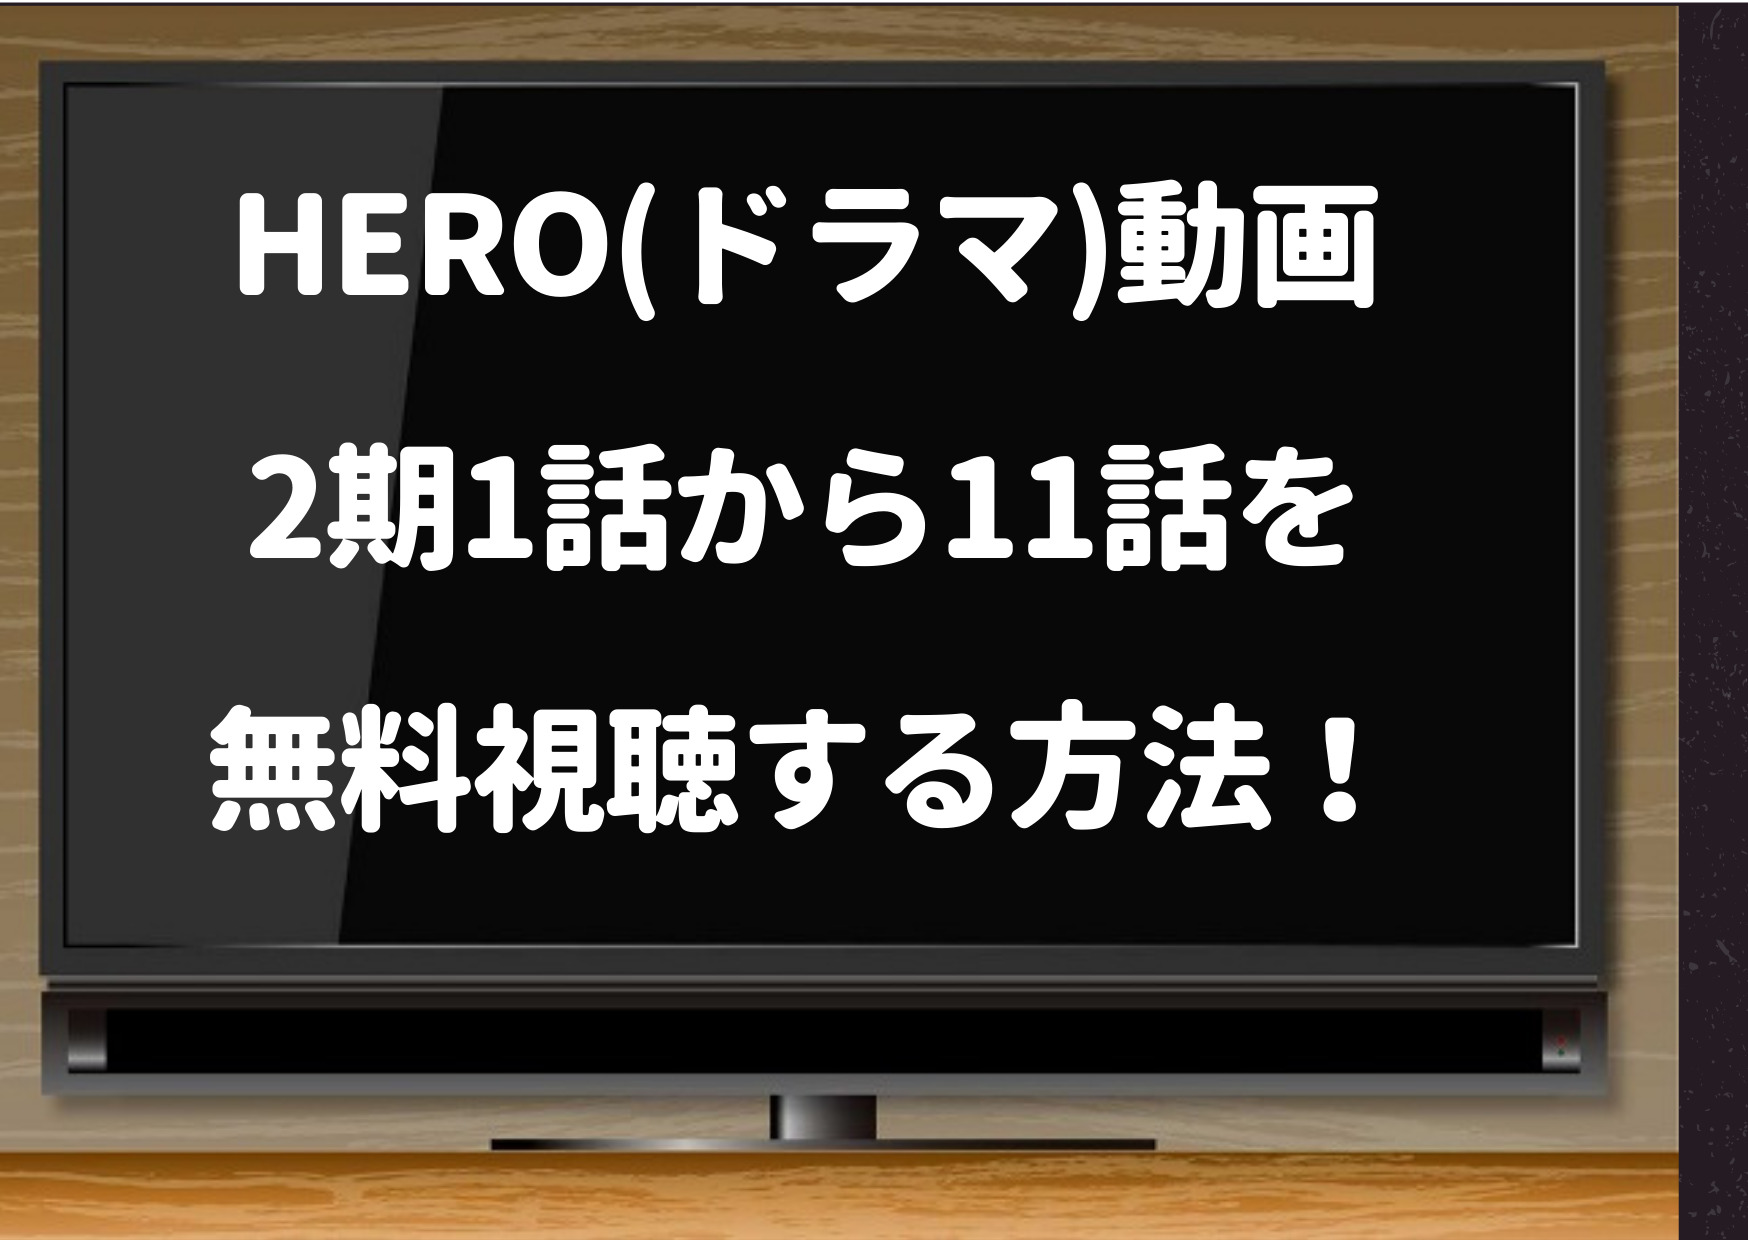 Hero ドラマ 動画2期1話から11話をpandoraで見るのは危険 公式動画を無料視聴する方法を教えます ジャニーズcinema N Drama